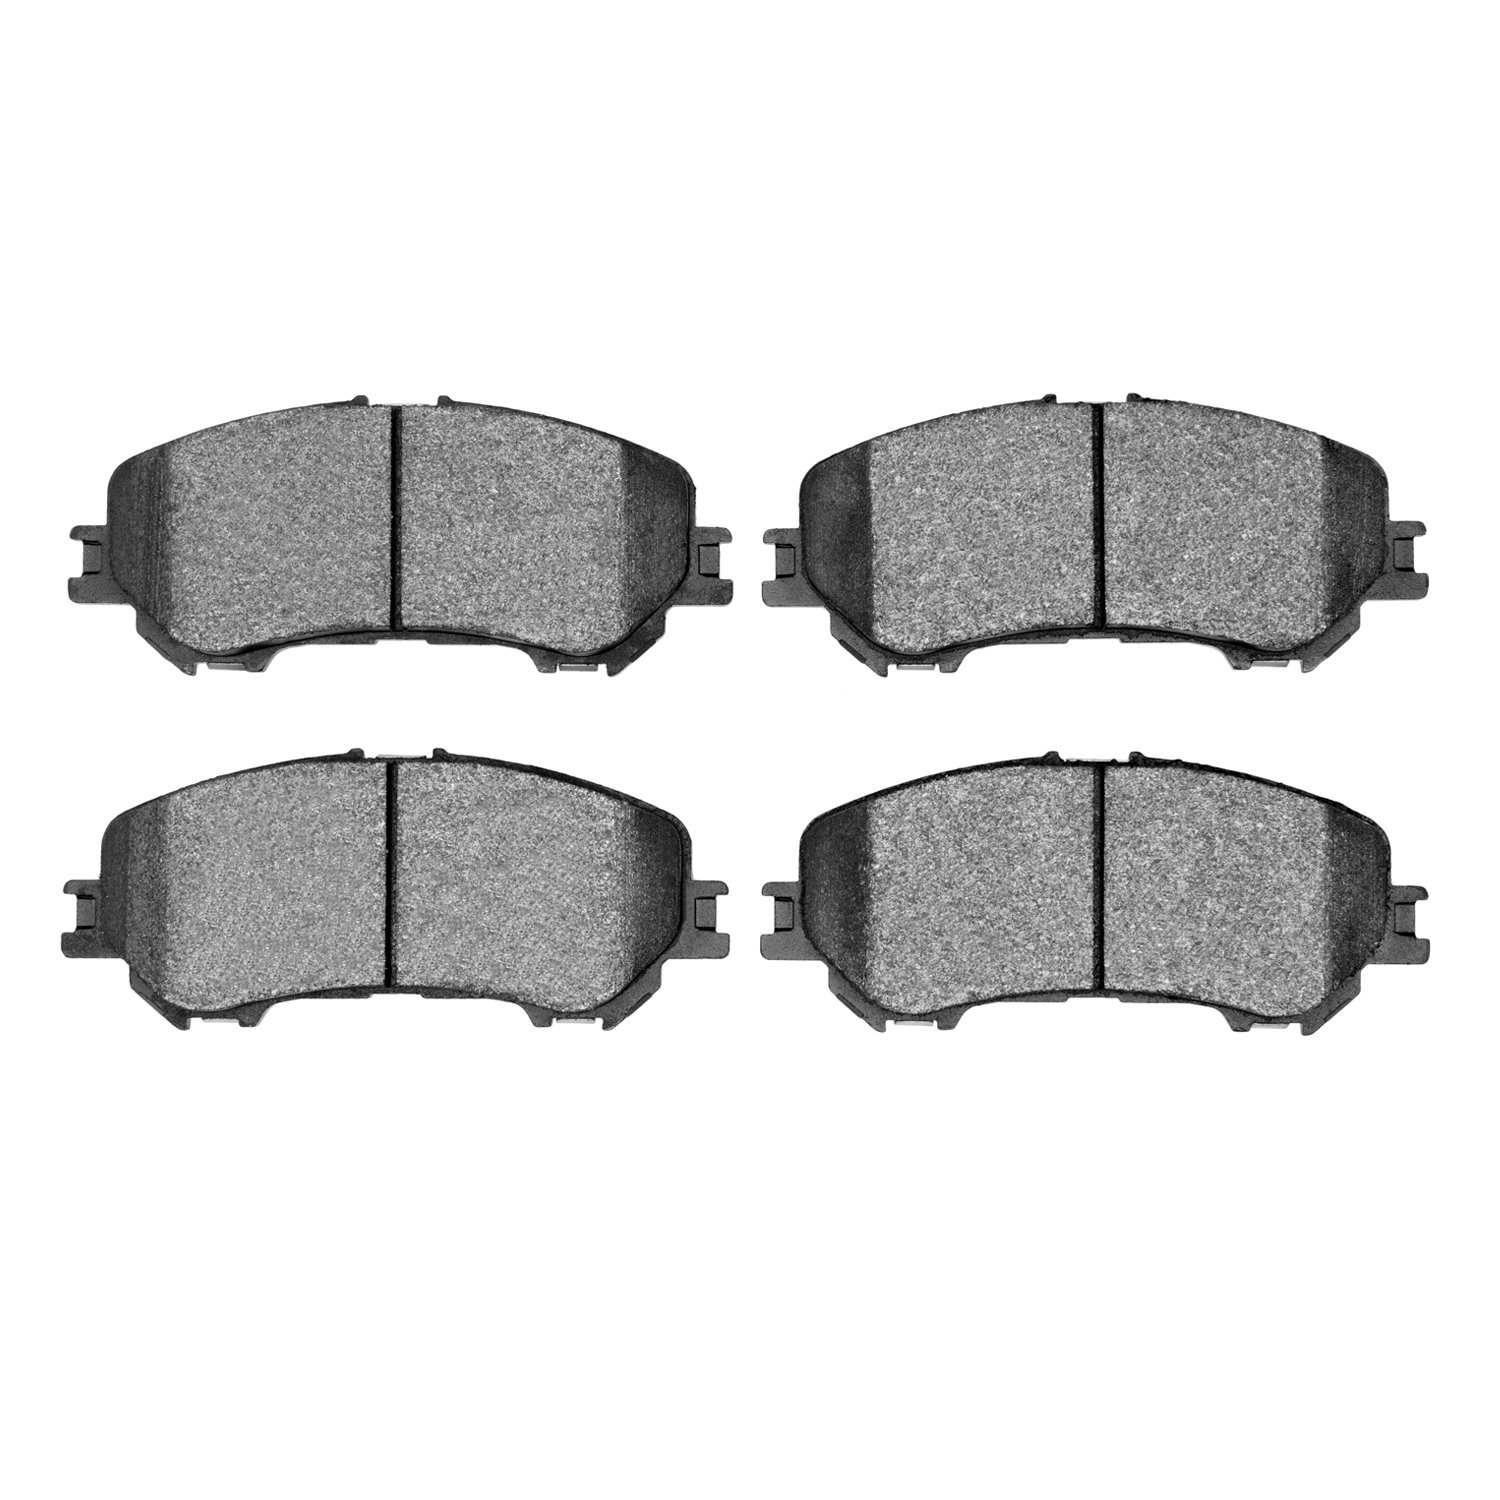 5000 Advanced Ceramic Brake Pads, Fits Select Multiple